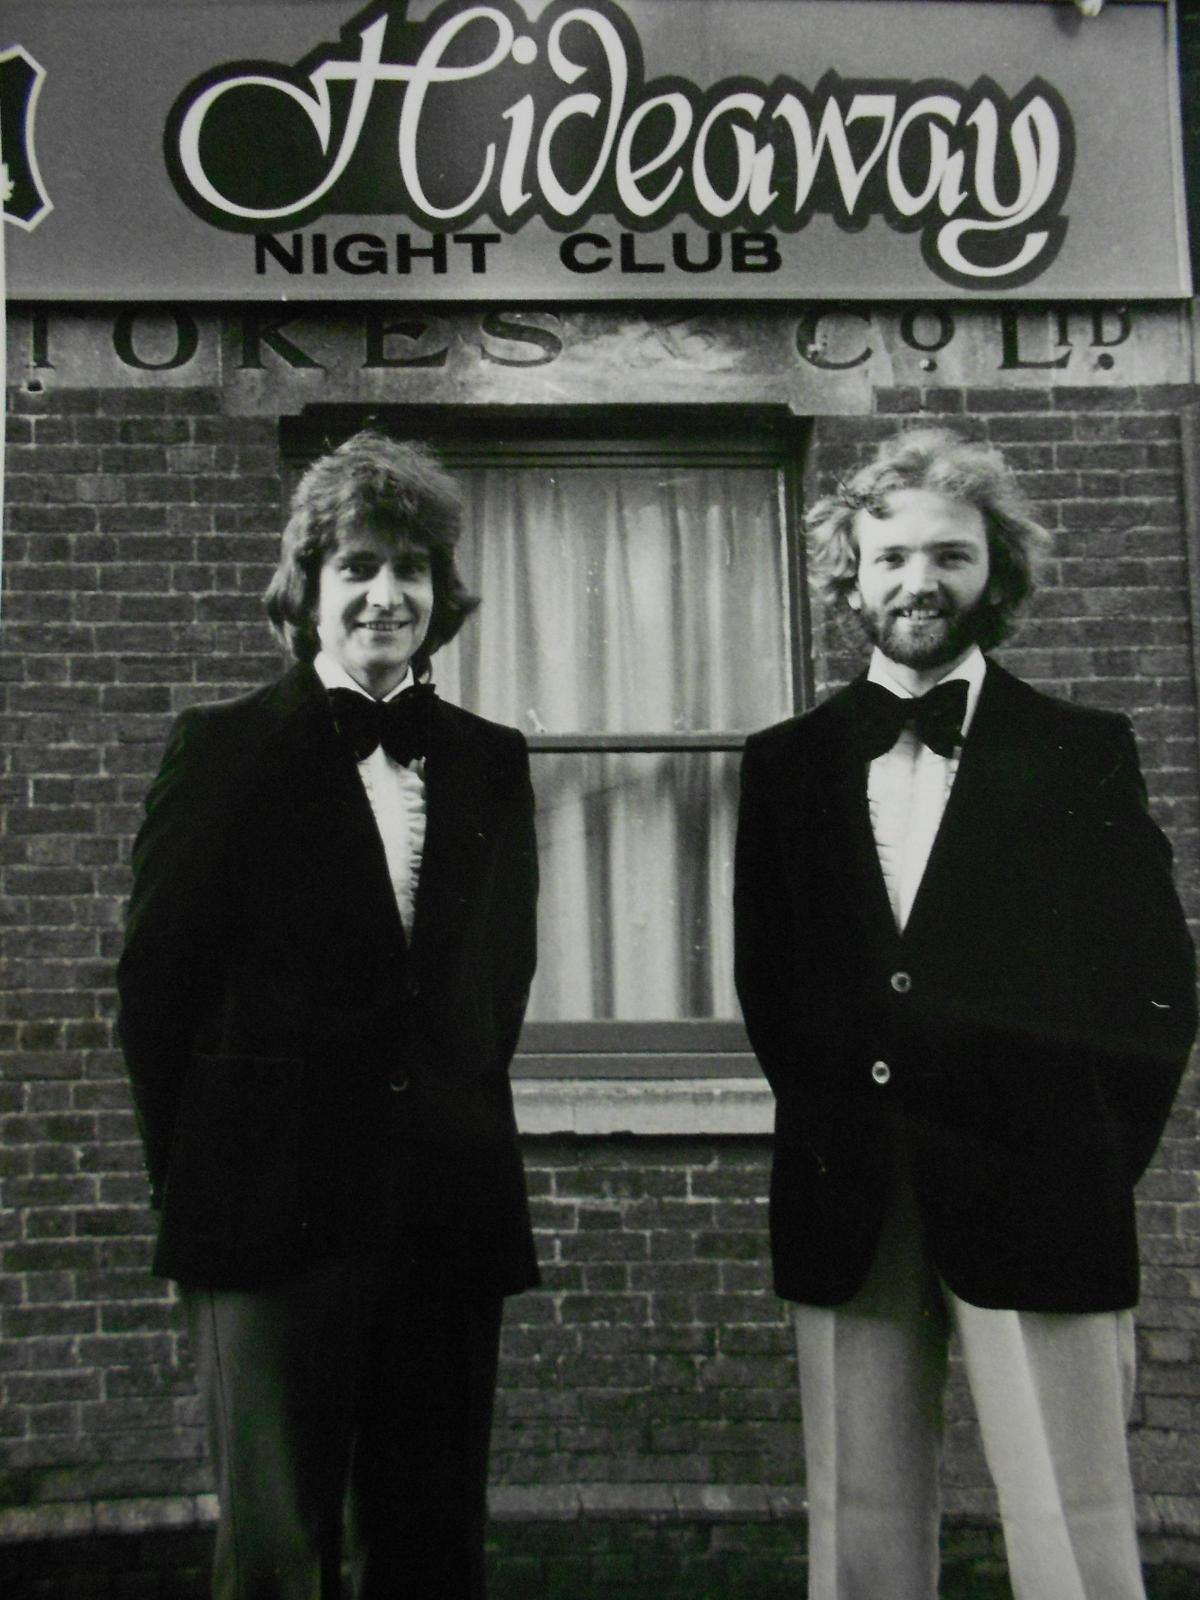 Did you enjoy nights out at Hideaway Nightclub in Bank Street?